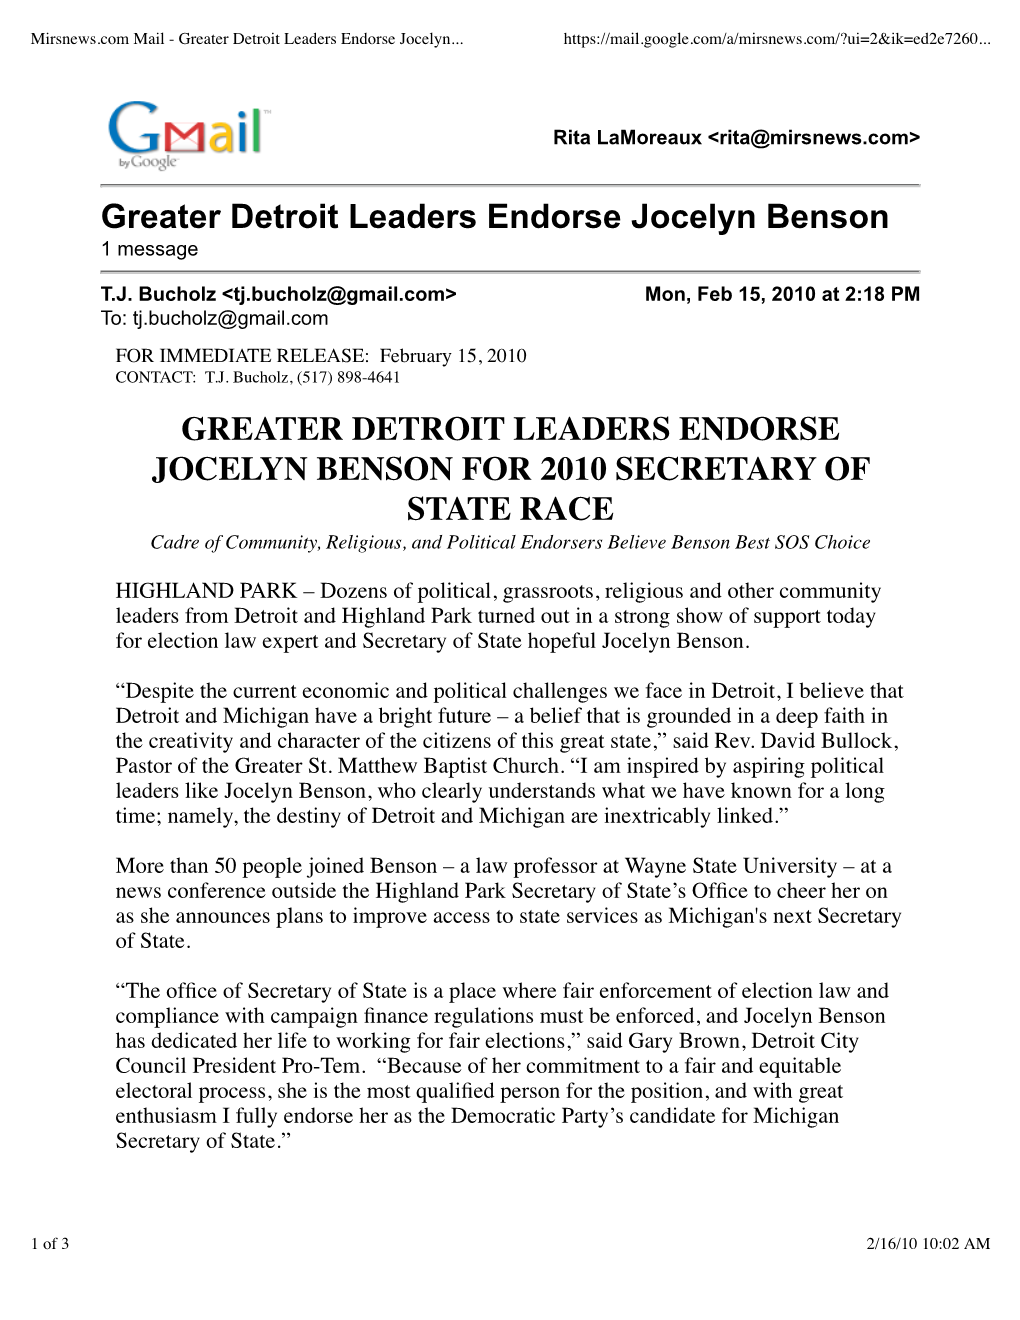 Greater Detroit Leaders Endorse Jocelyn Benson 1 Message